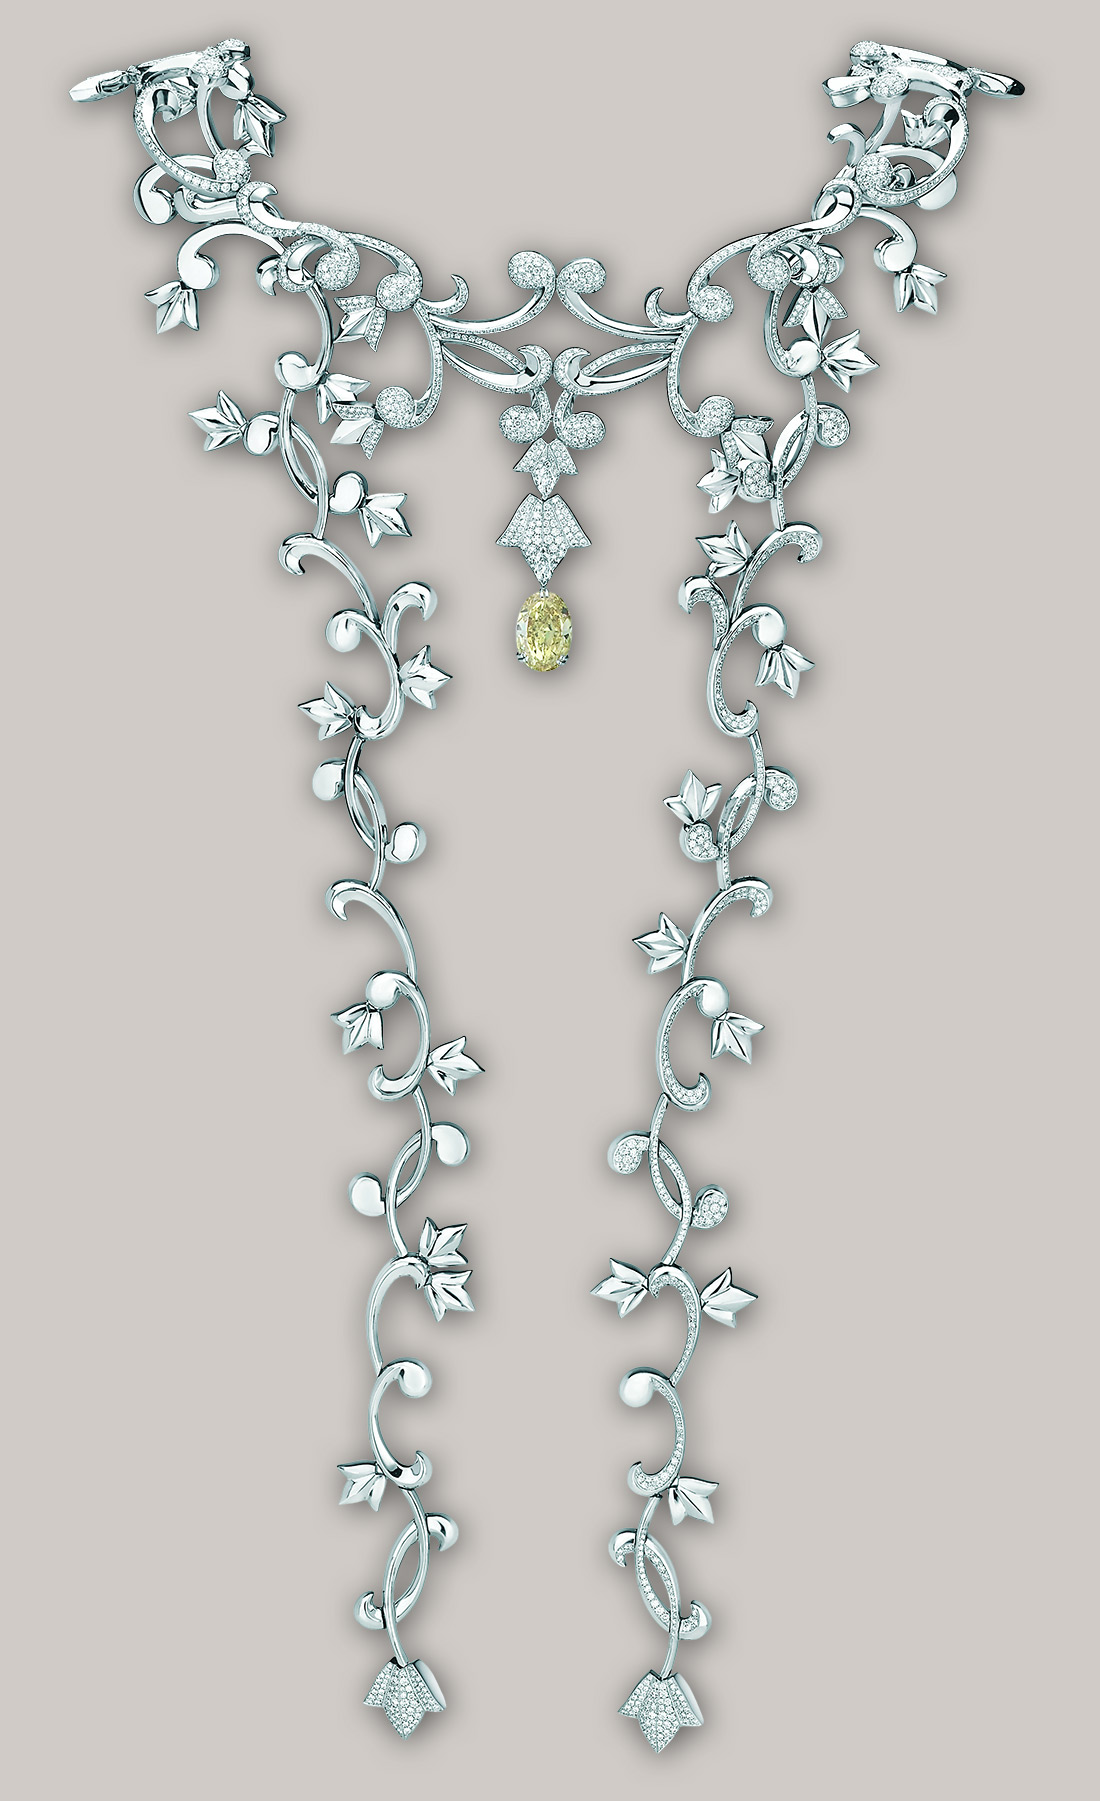 Mellerio dits Meller Secrets de Lys necklace with a 15cts yellow diamond